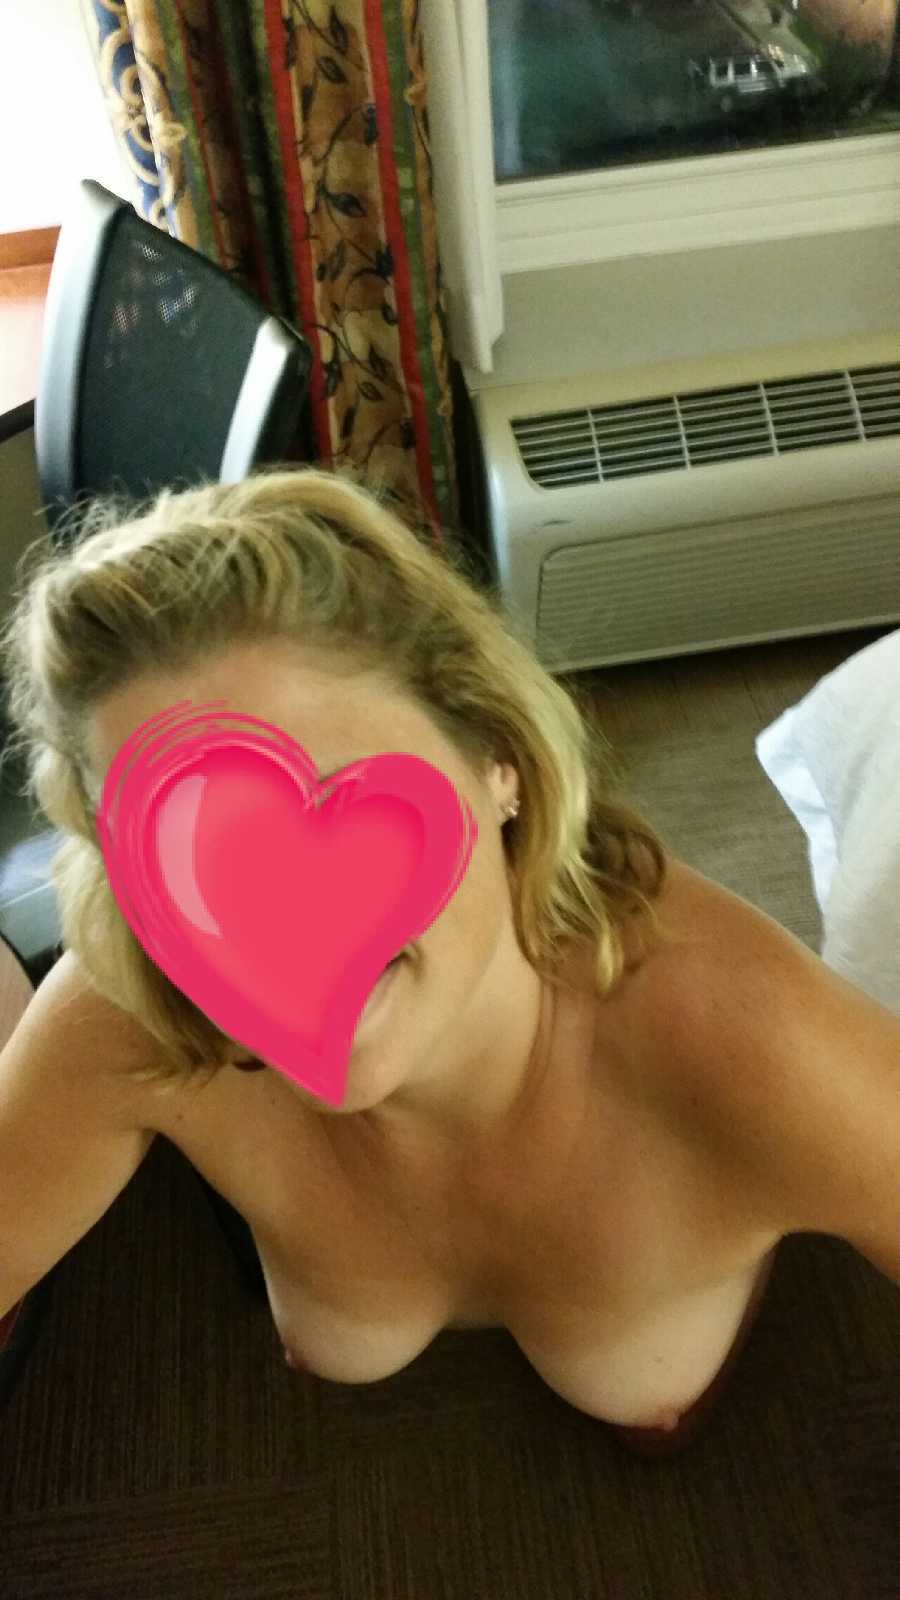 Nude at Hotel Window